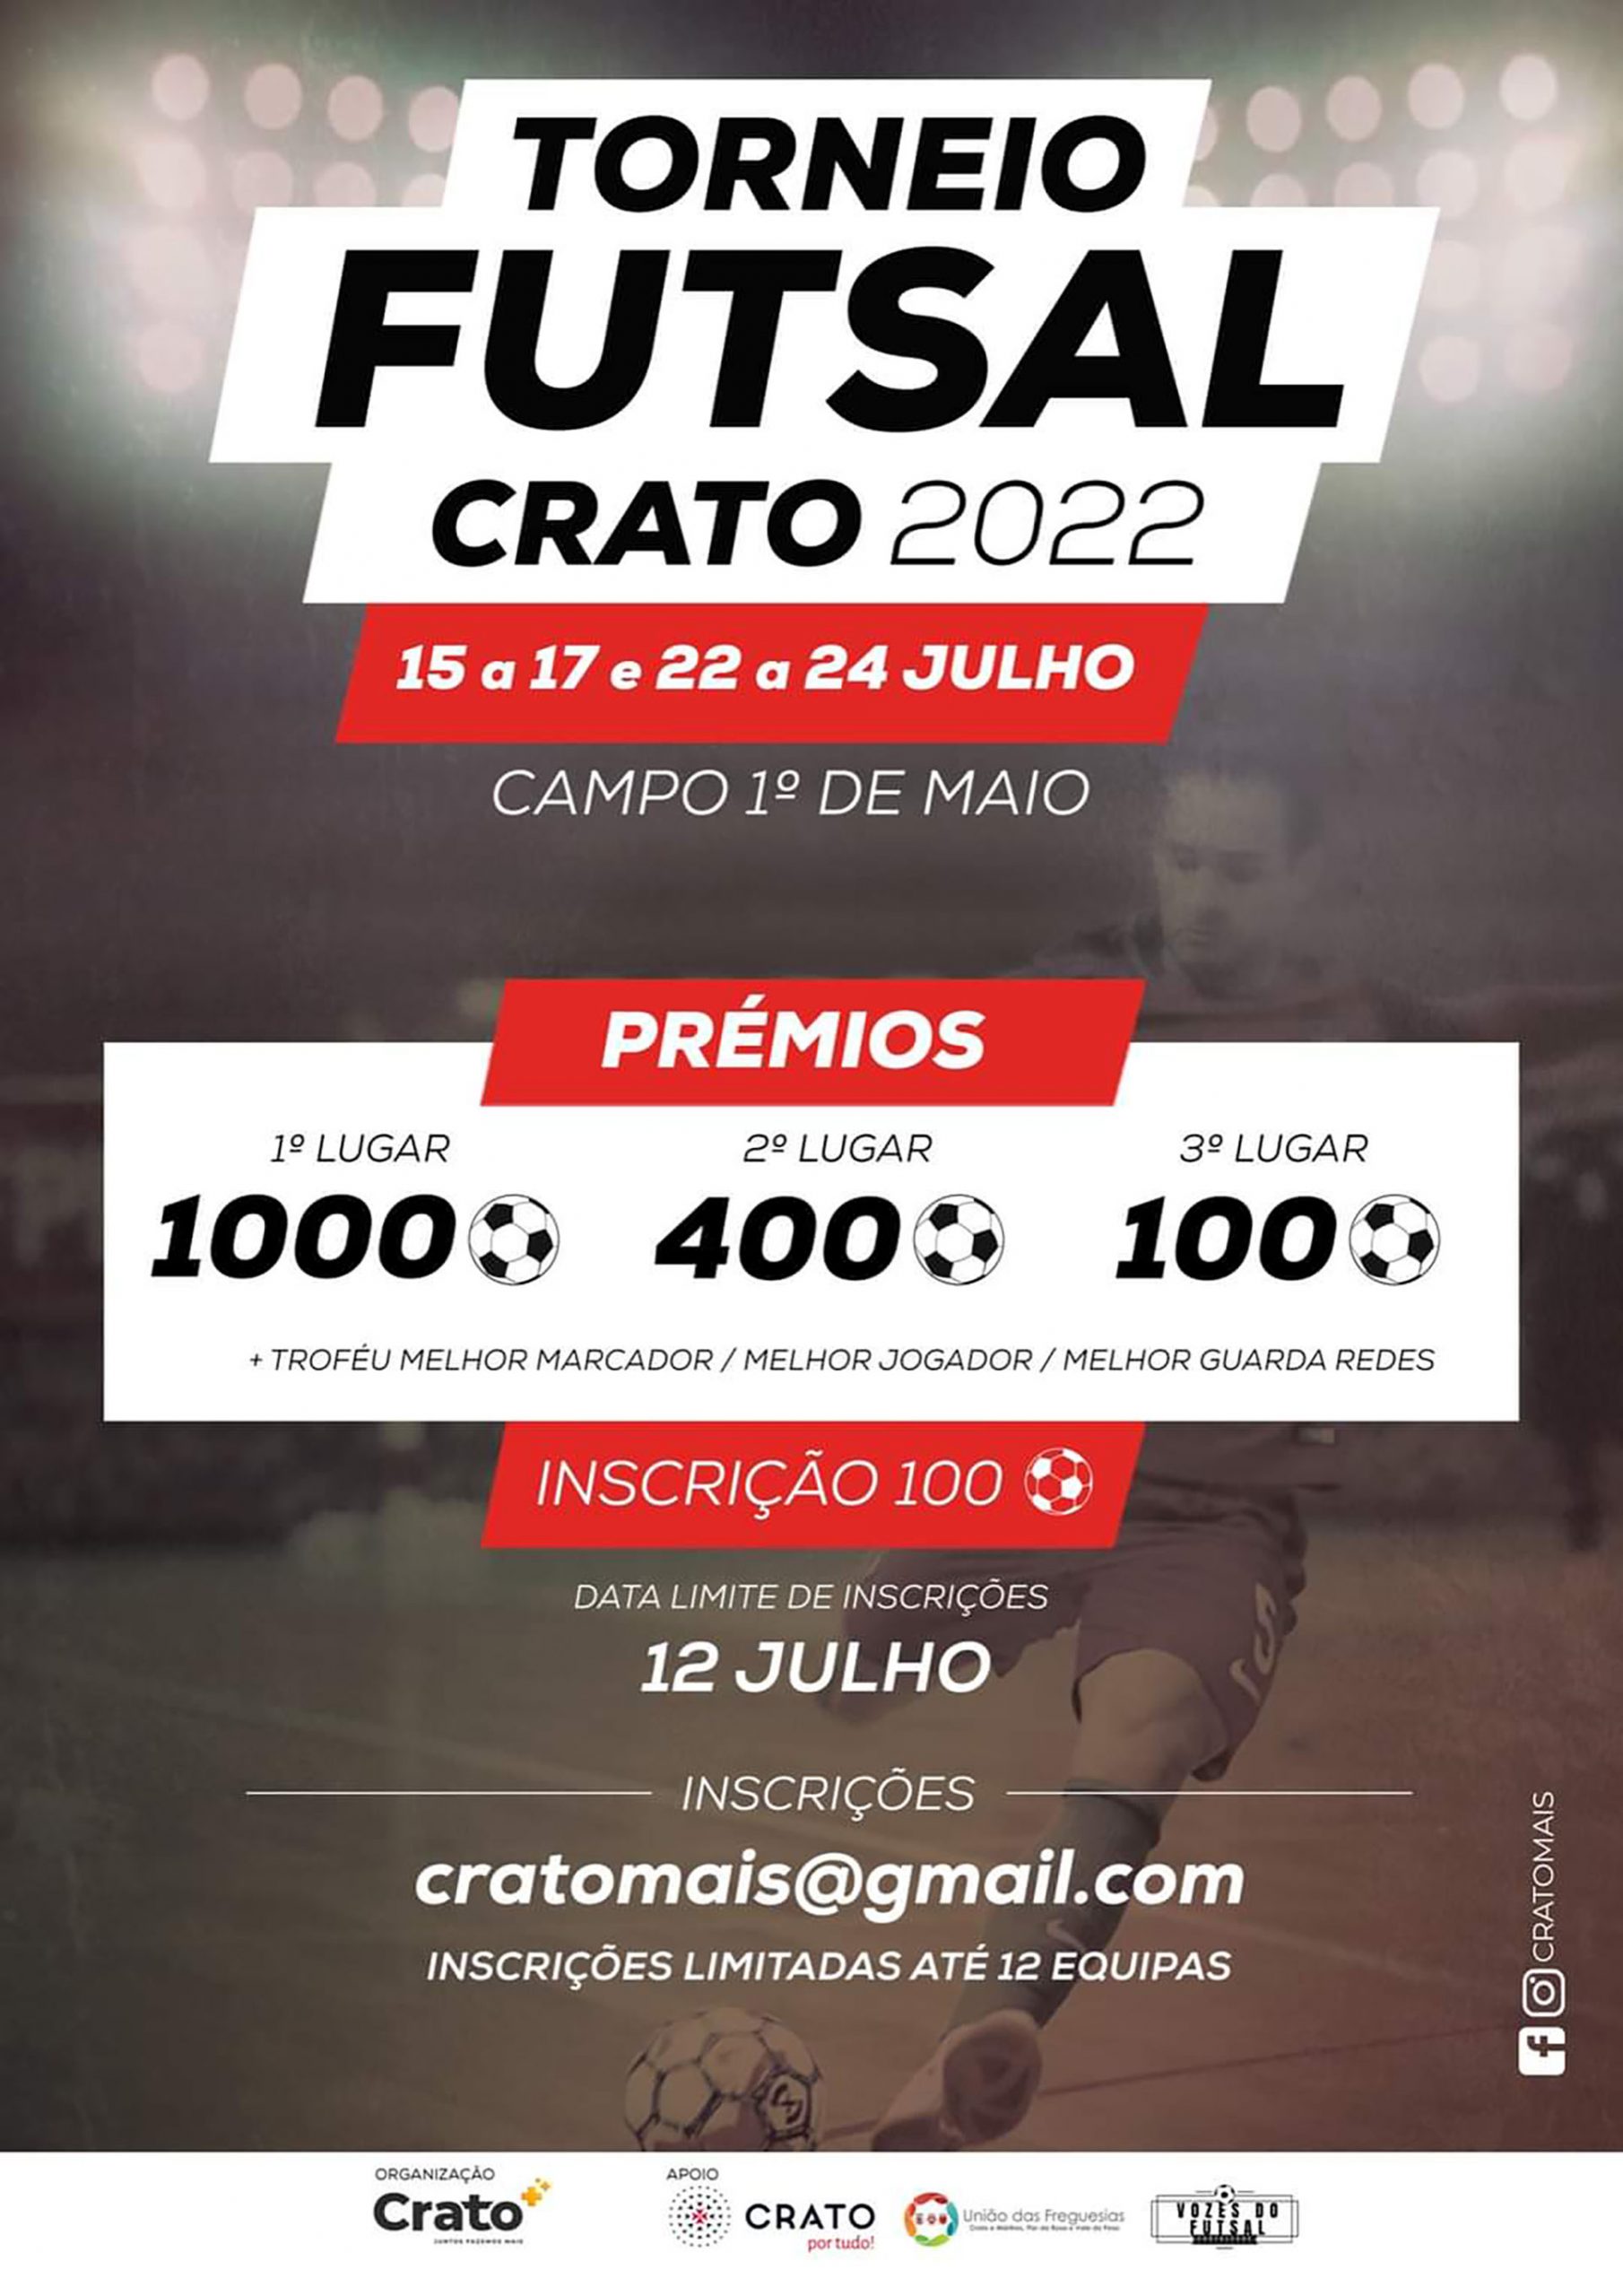 Torneio Futsal Crato 2022